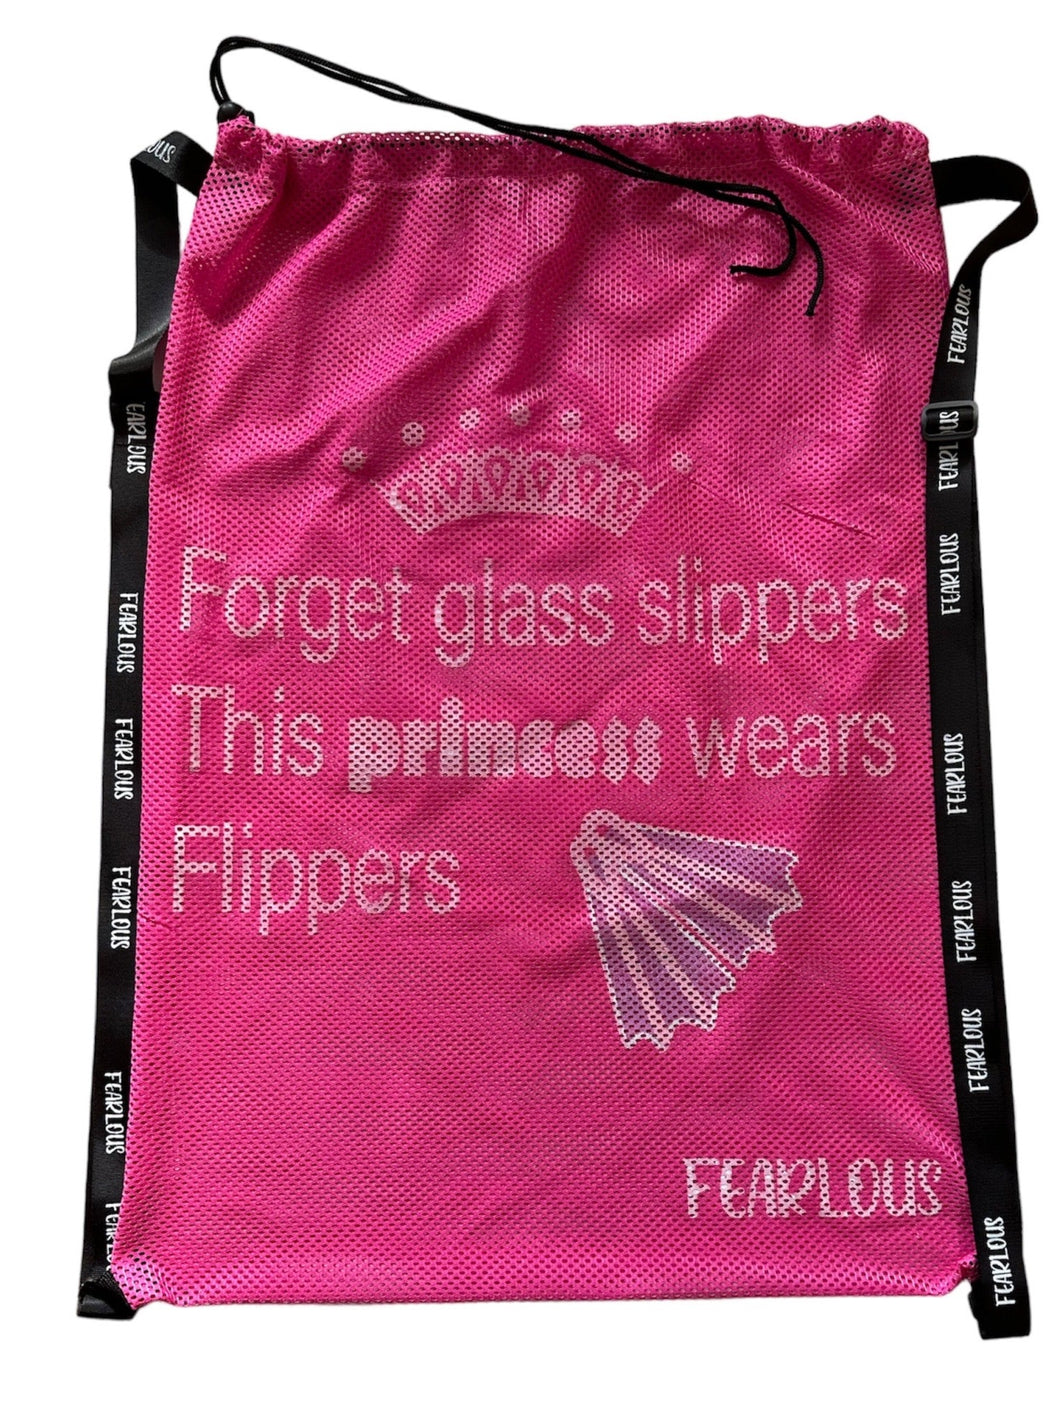 FEARLOUS -  Mesh Kit Bag - THIS PRINCESS WEARS FLIPPERS